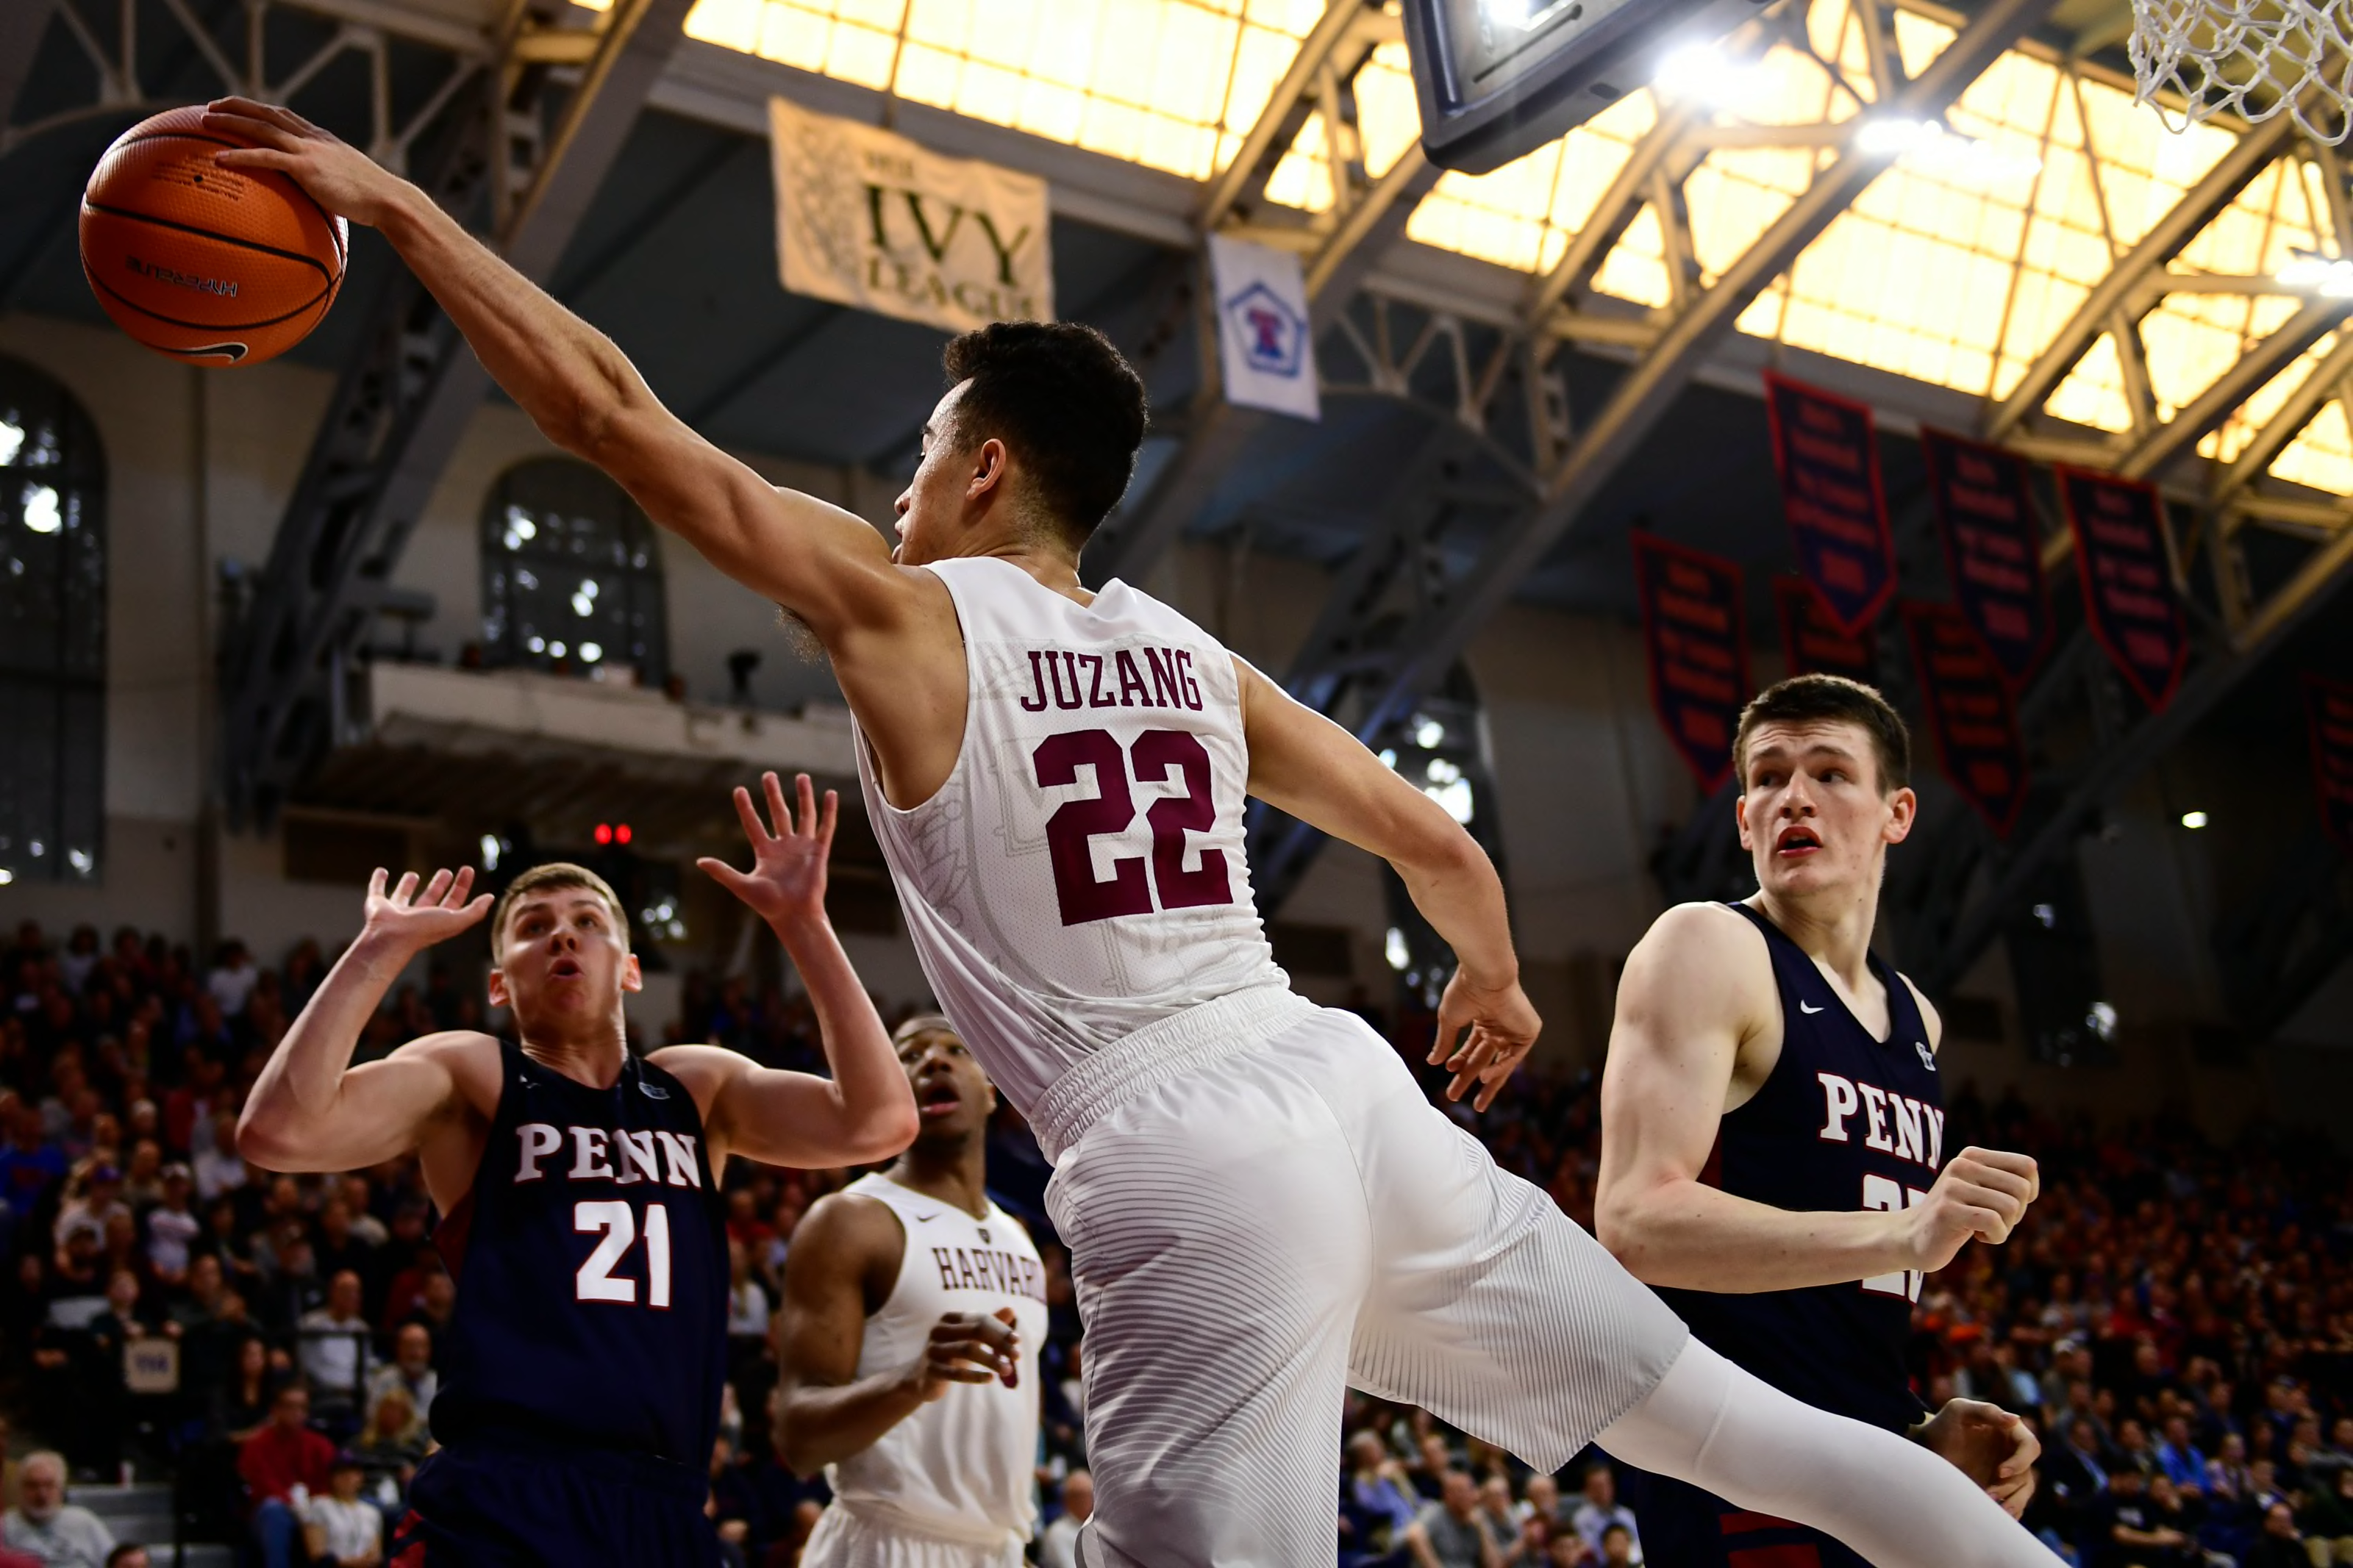 Ivy League Basketball Close battle at top between Yale and Harvard